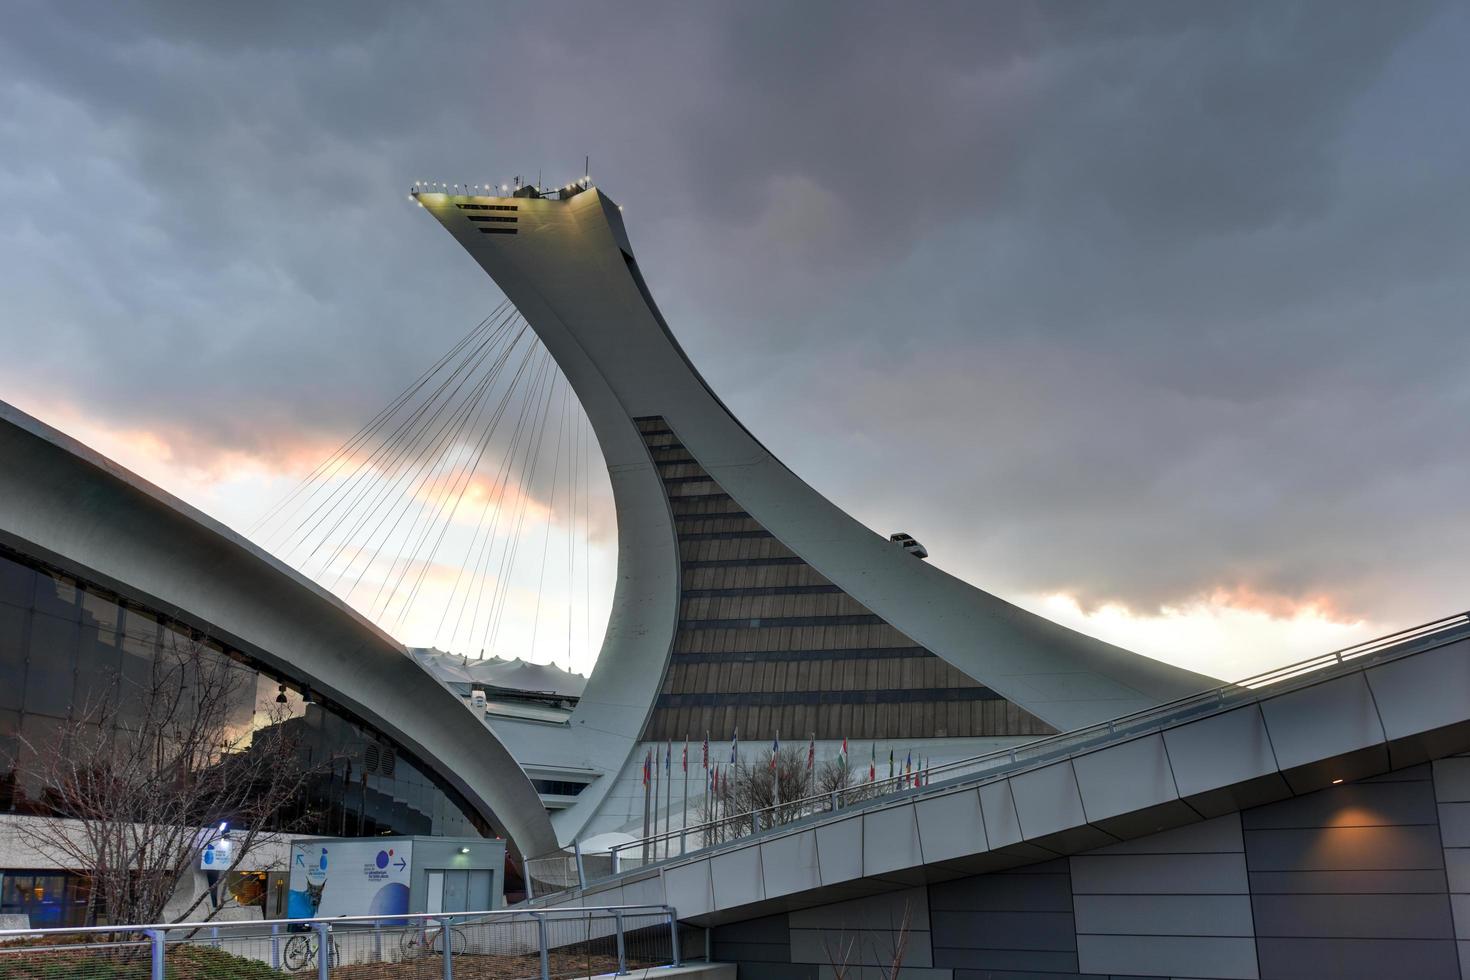 estádio olímpico de montreal em montreal, canadá, 2022 foto